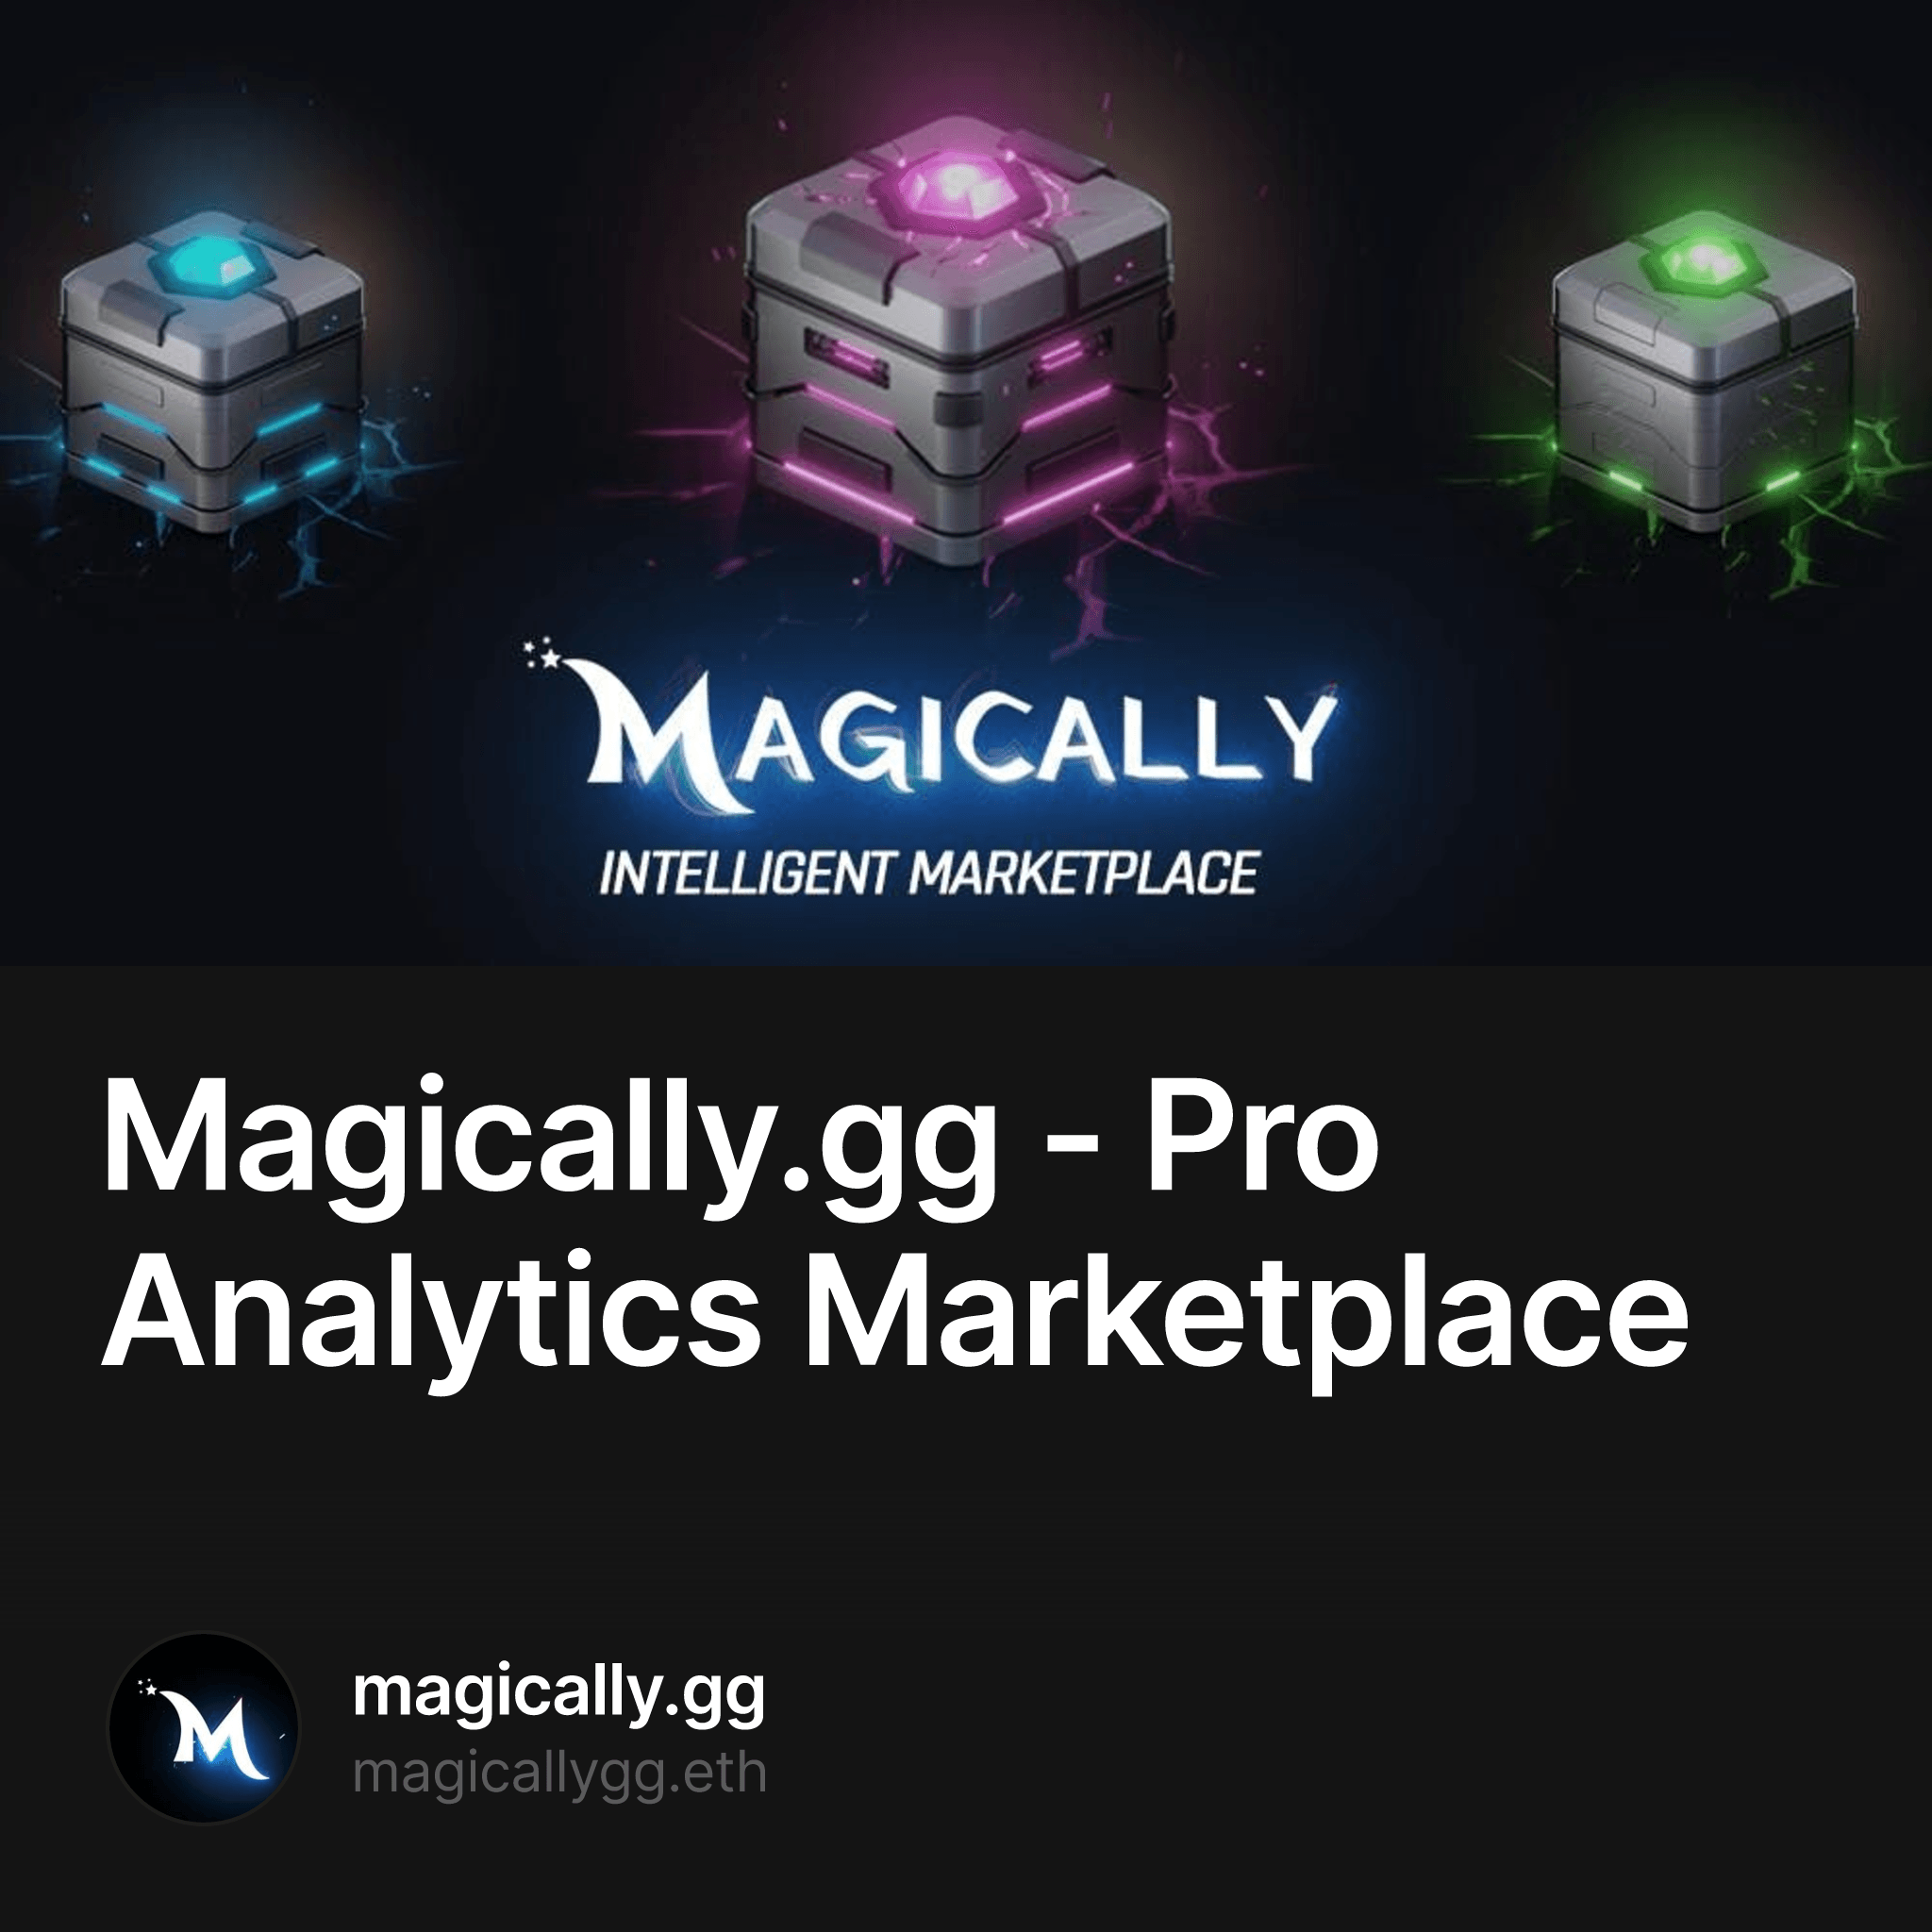 Magically.gg - Pro Analytics Marketplace 840/1000